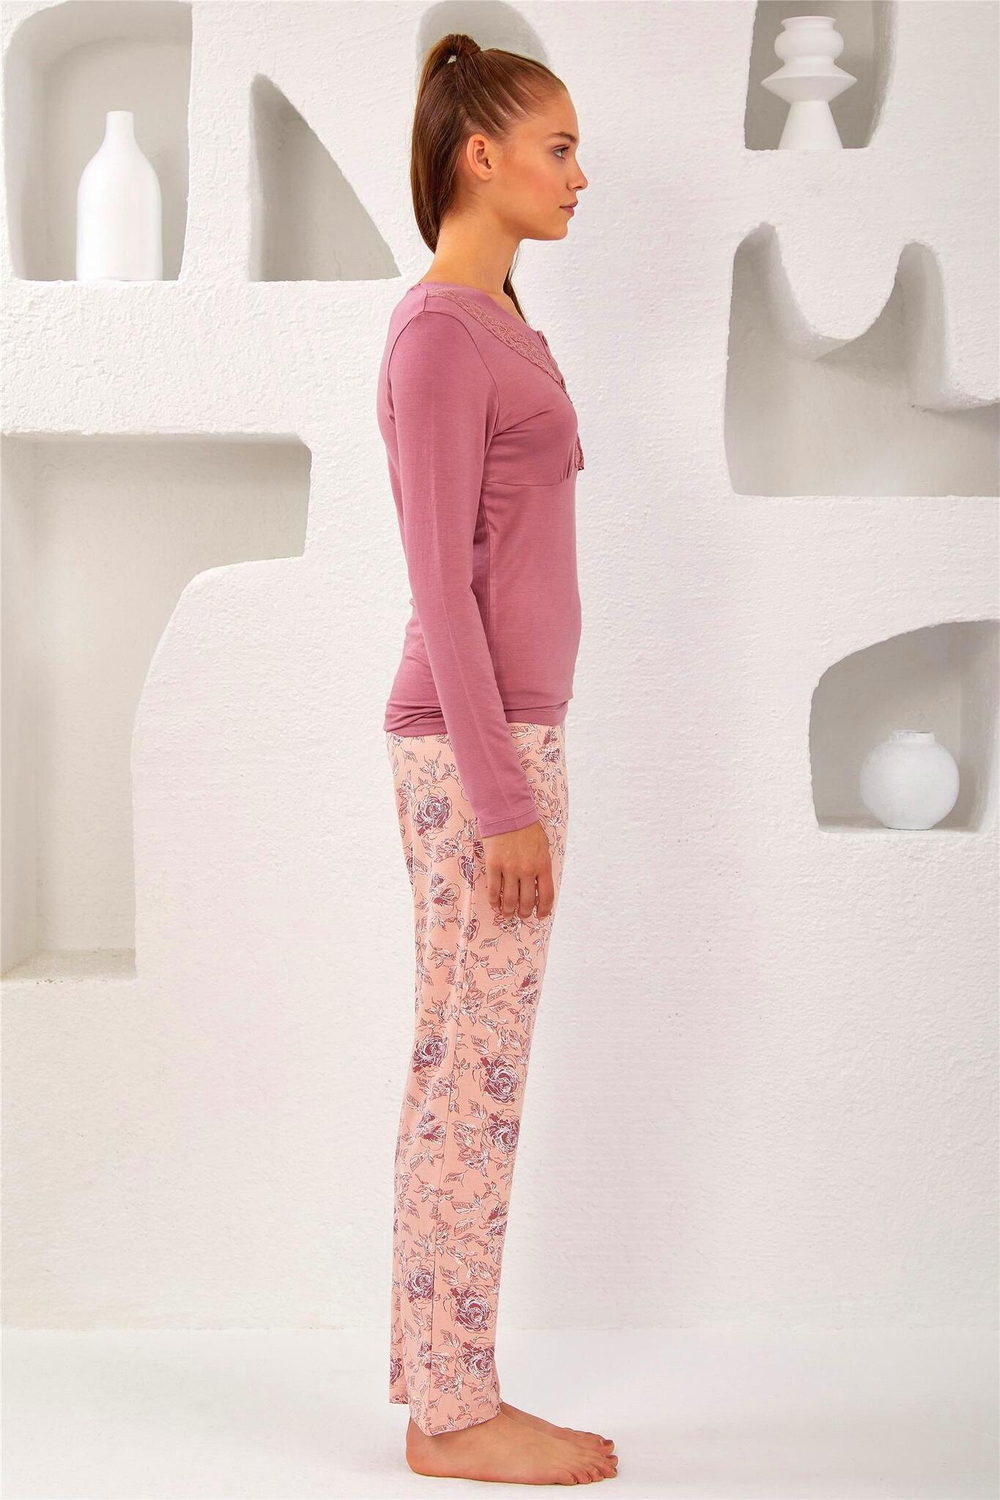 RELAX MODE - Женская пижама с брюками - 10762